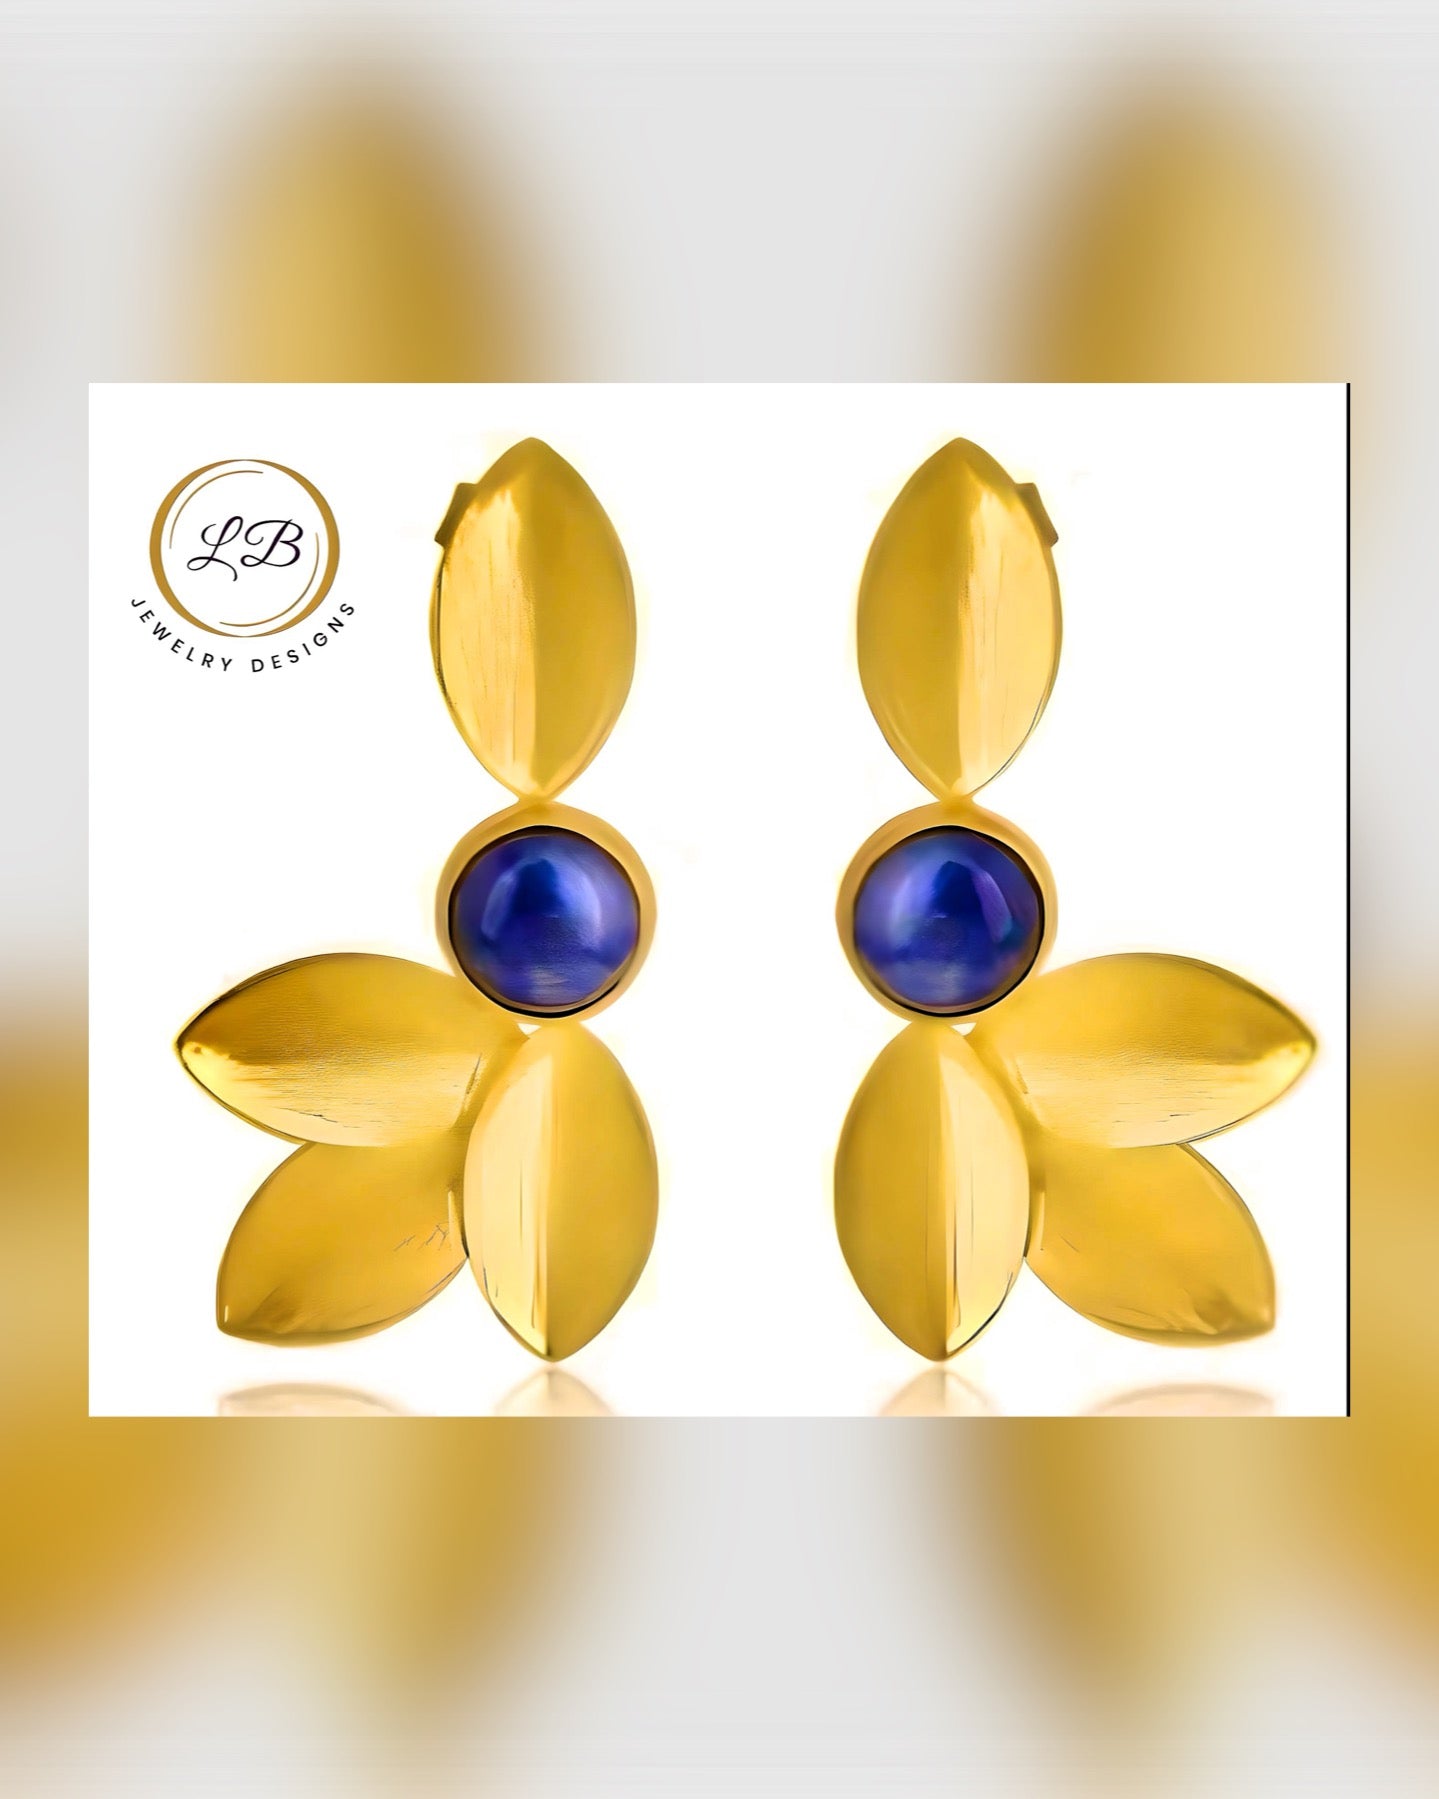 Lapis Lazuli Gemstone Leaf Design 22k Brushed Gold Vermeil Statement Earrings 2"